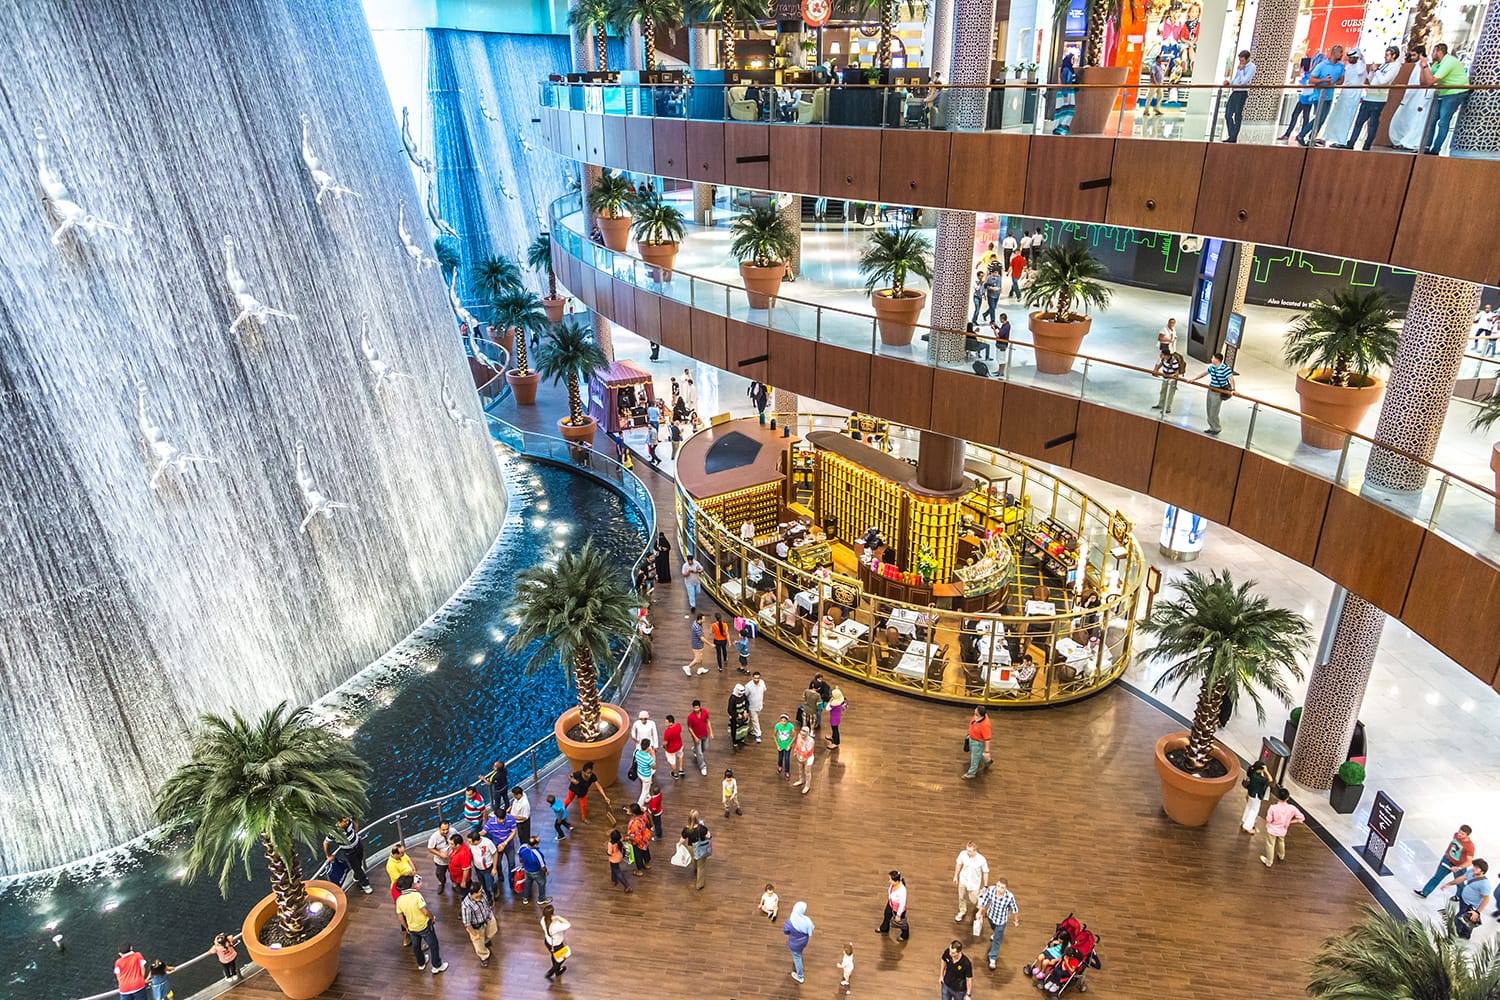 A waterfall inside the Dubai Mall